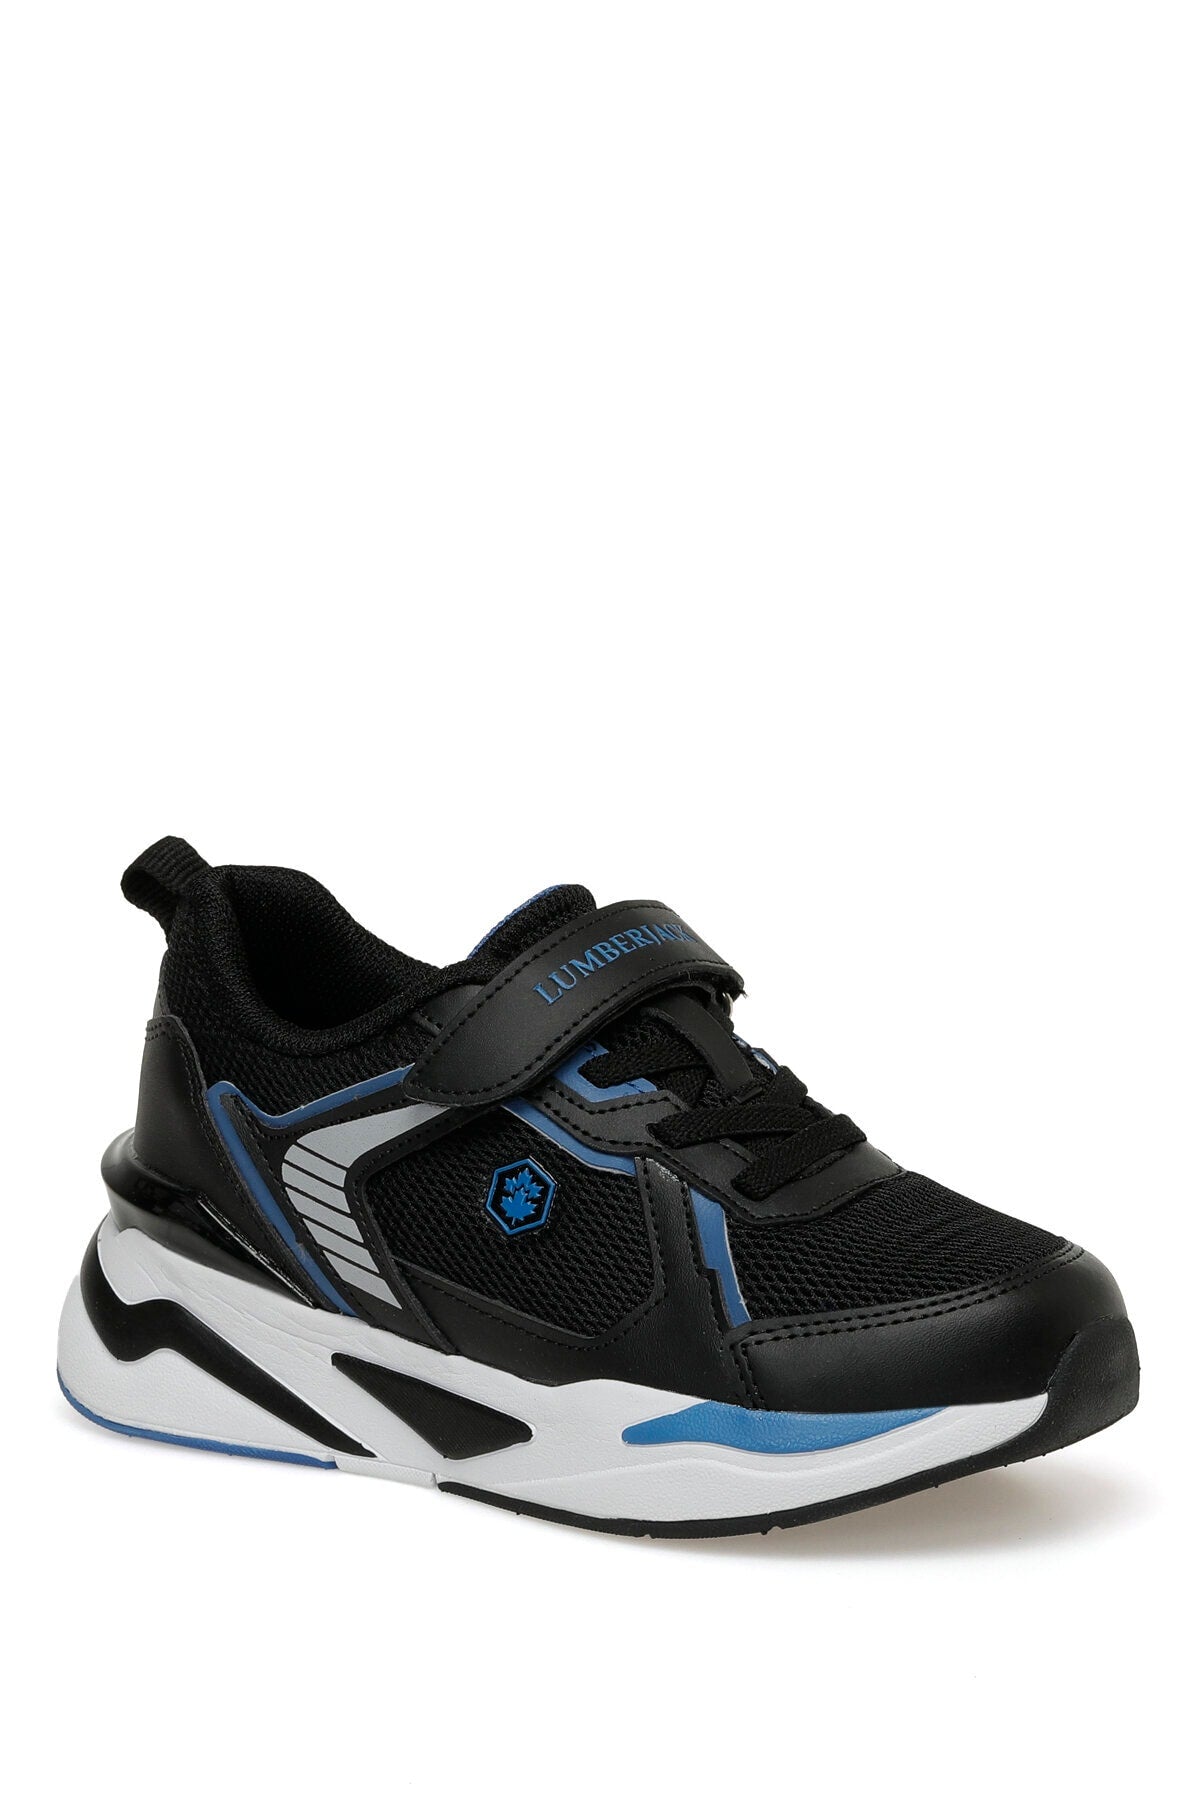 Oxford Jr 3fx Black Boys Running Shoes